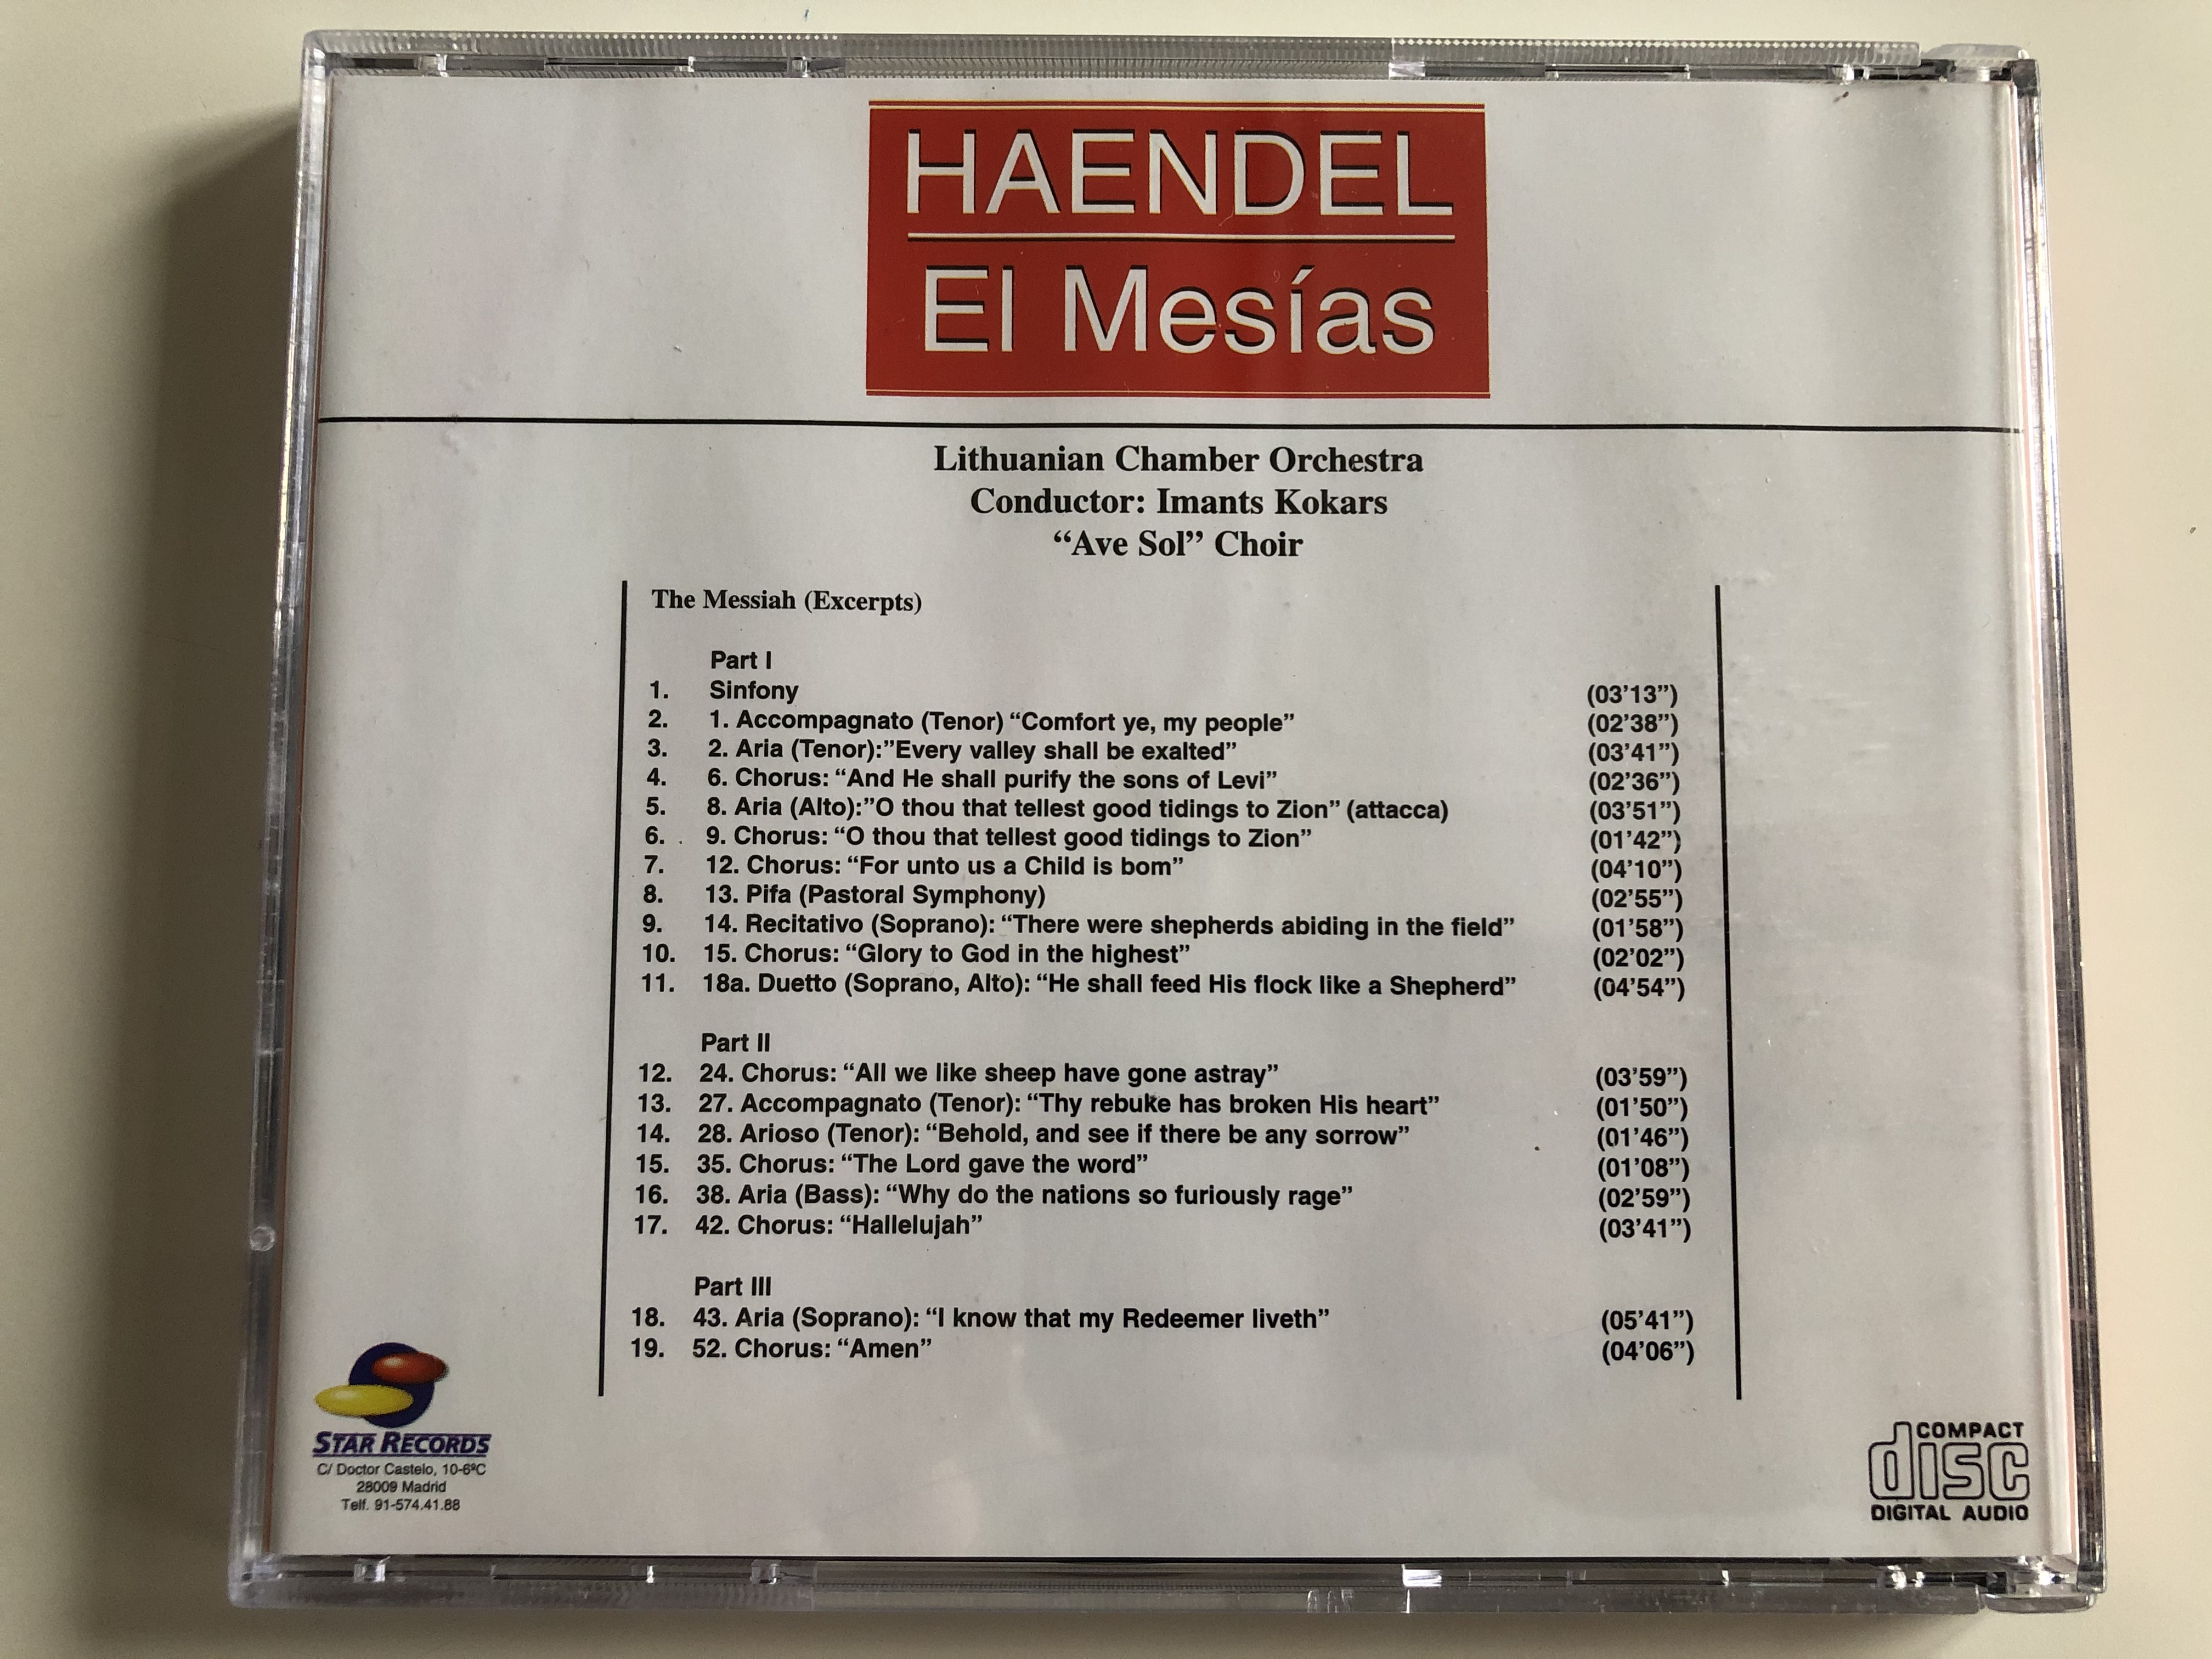 haendel-el-mes-as-lithuanian-chamber-orchestra-conductor-imants-kokars-ave-sol-choir-star-records-audio-cd-1998-na-2442-3-.jpg